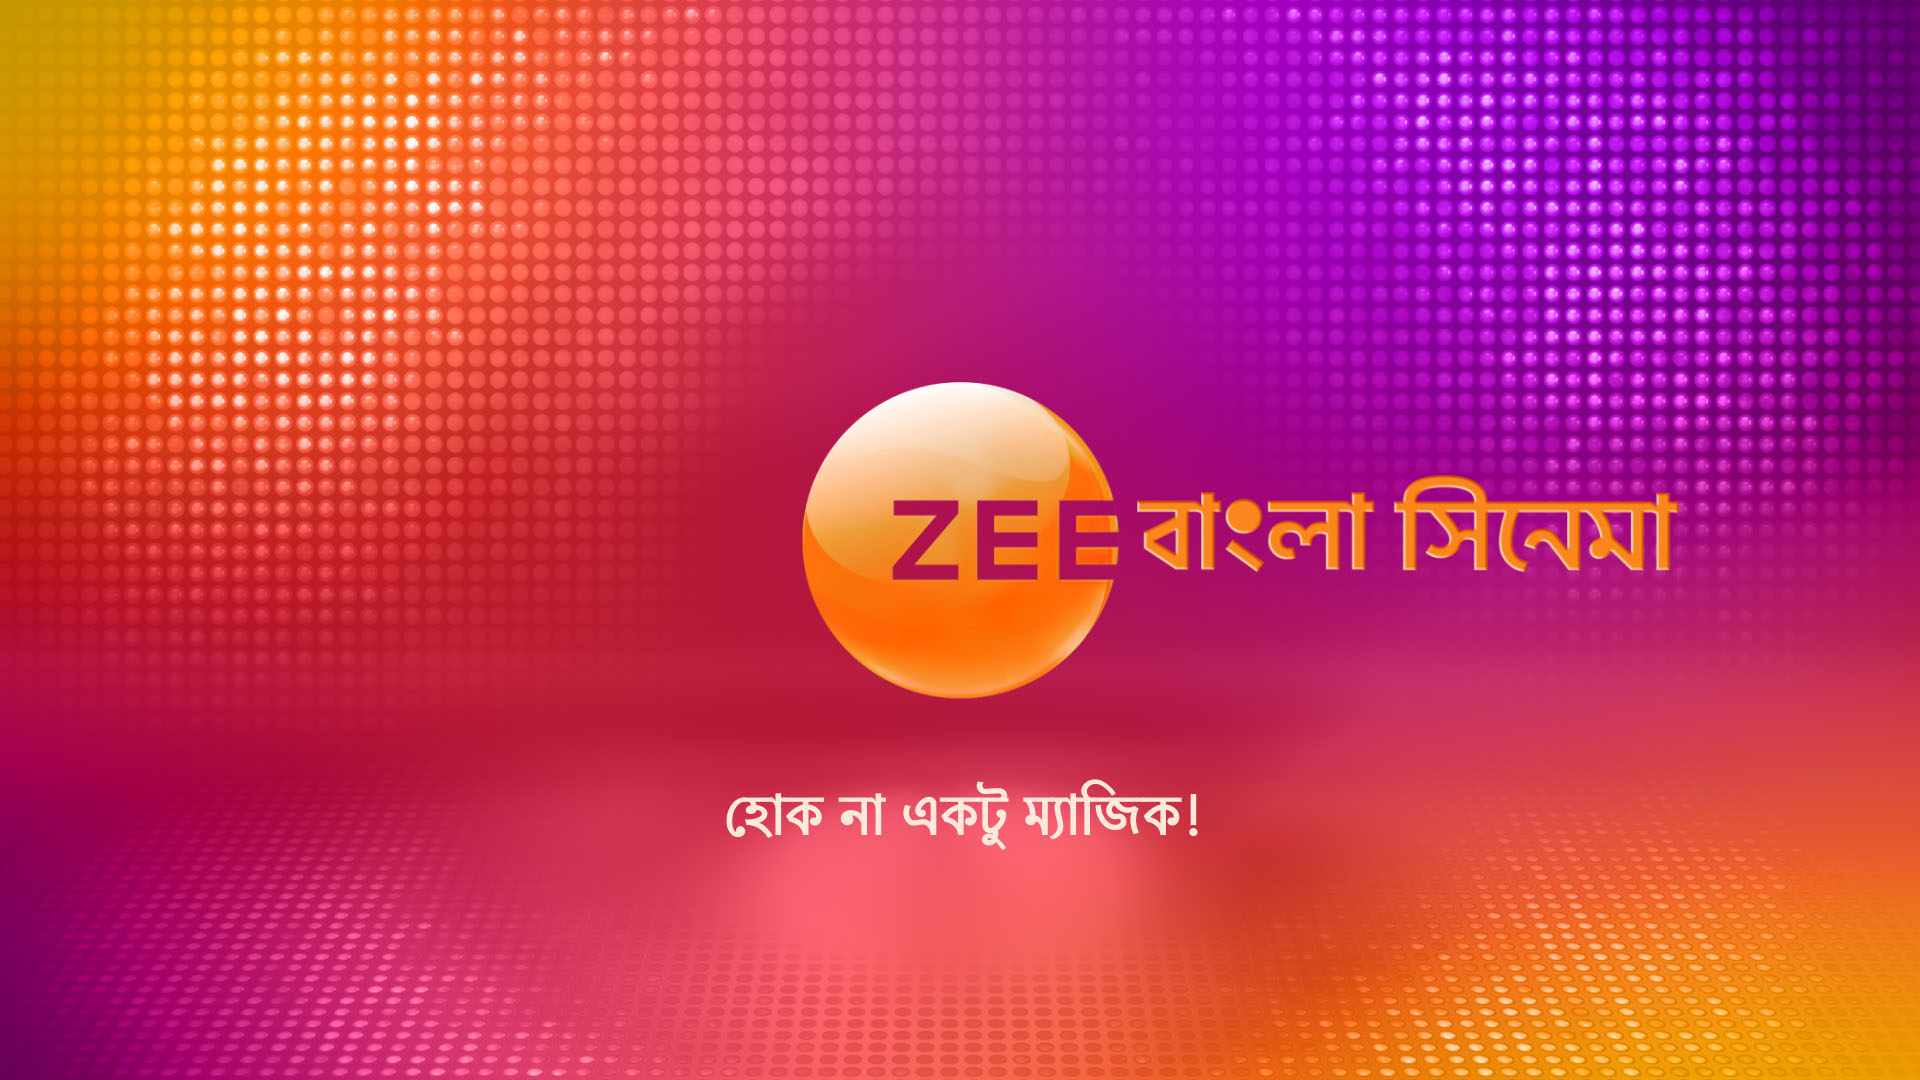 ZEE Bangla Cinema unveils new brand identity to mark a successful decade of entertaining Bengali movie lovers